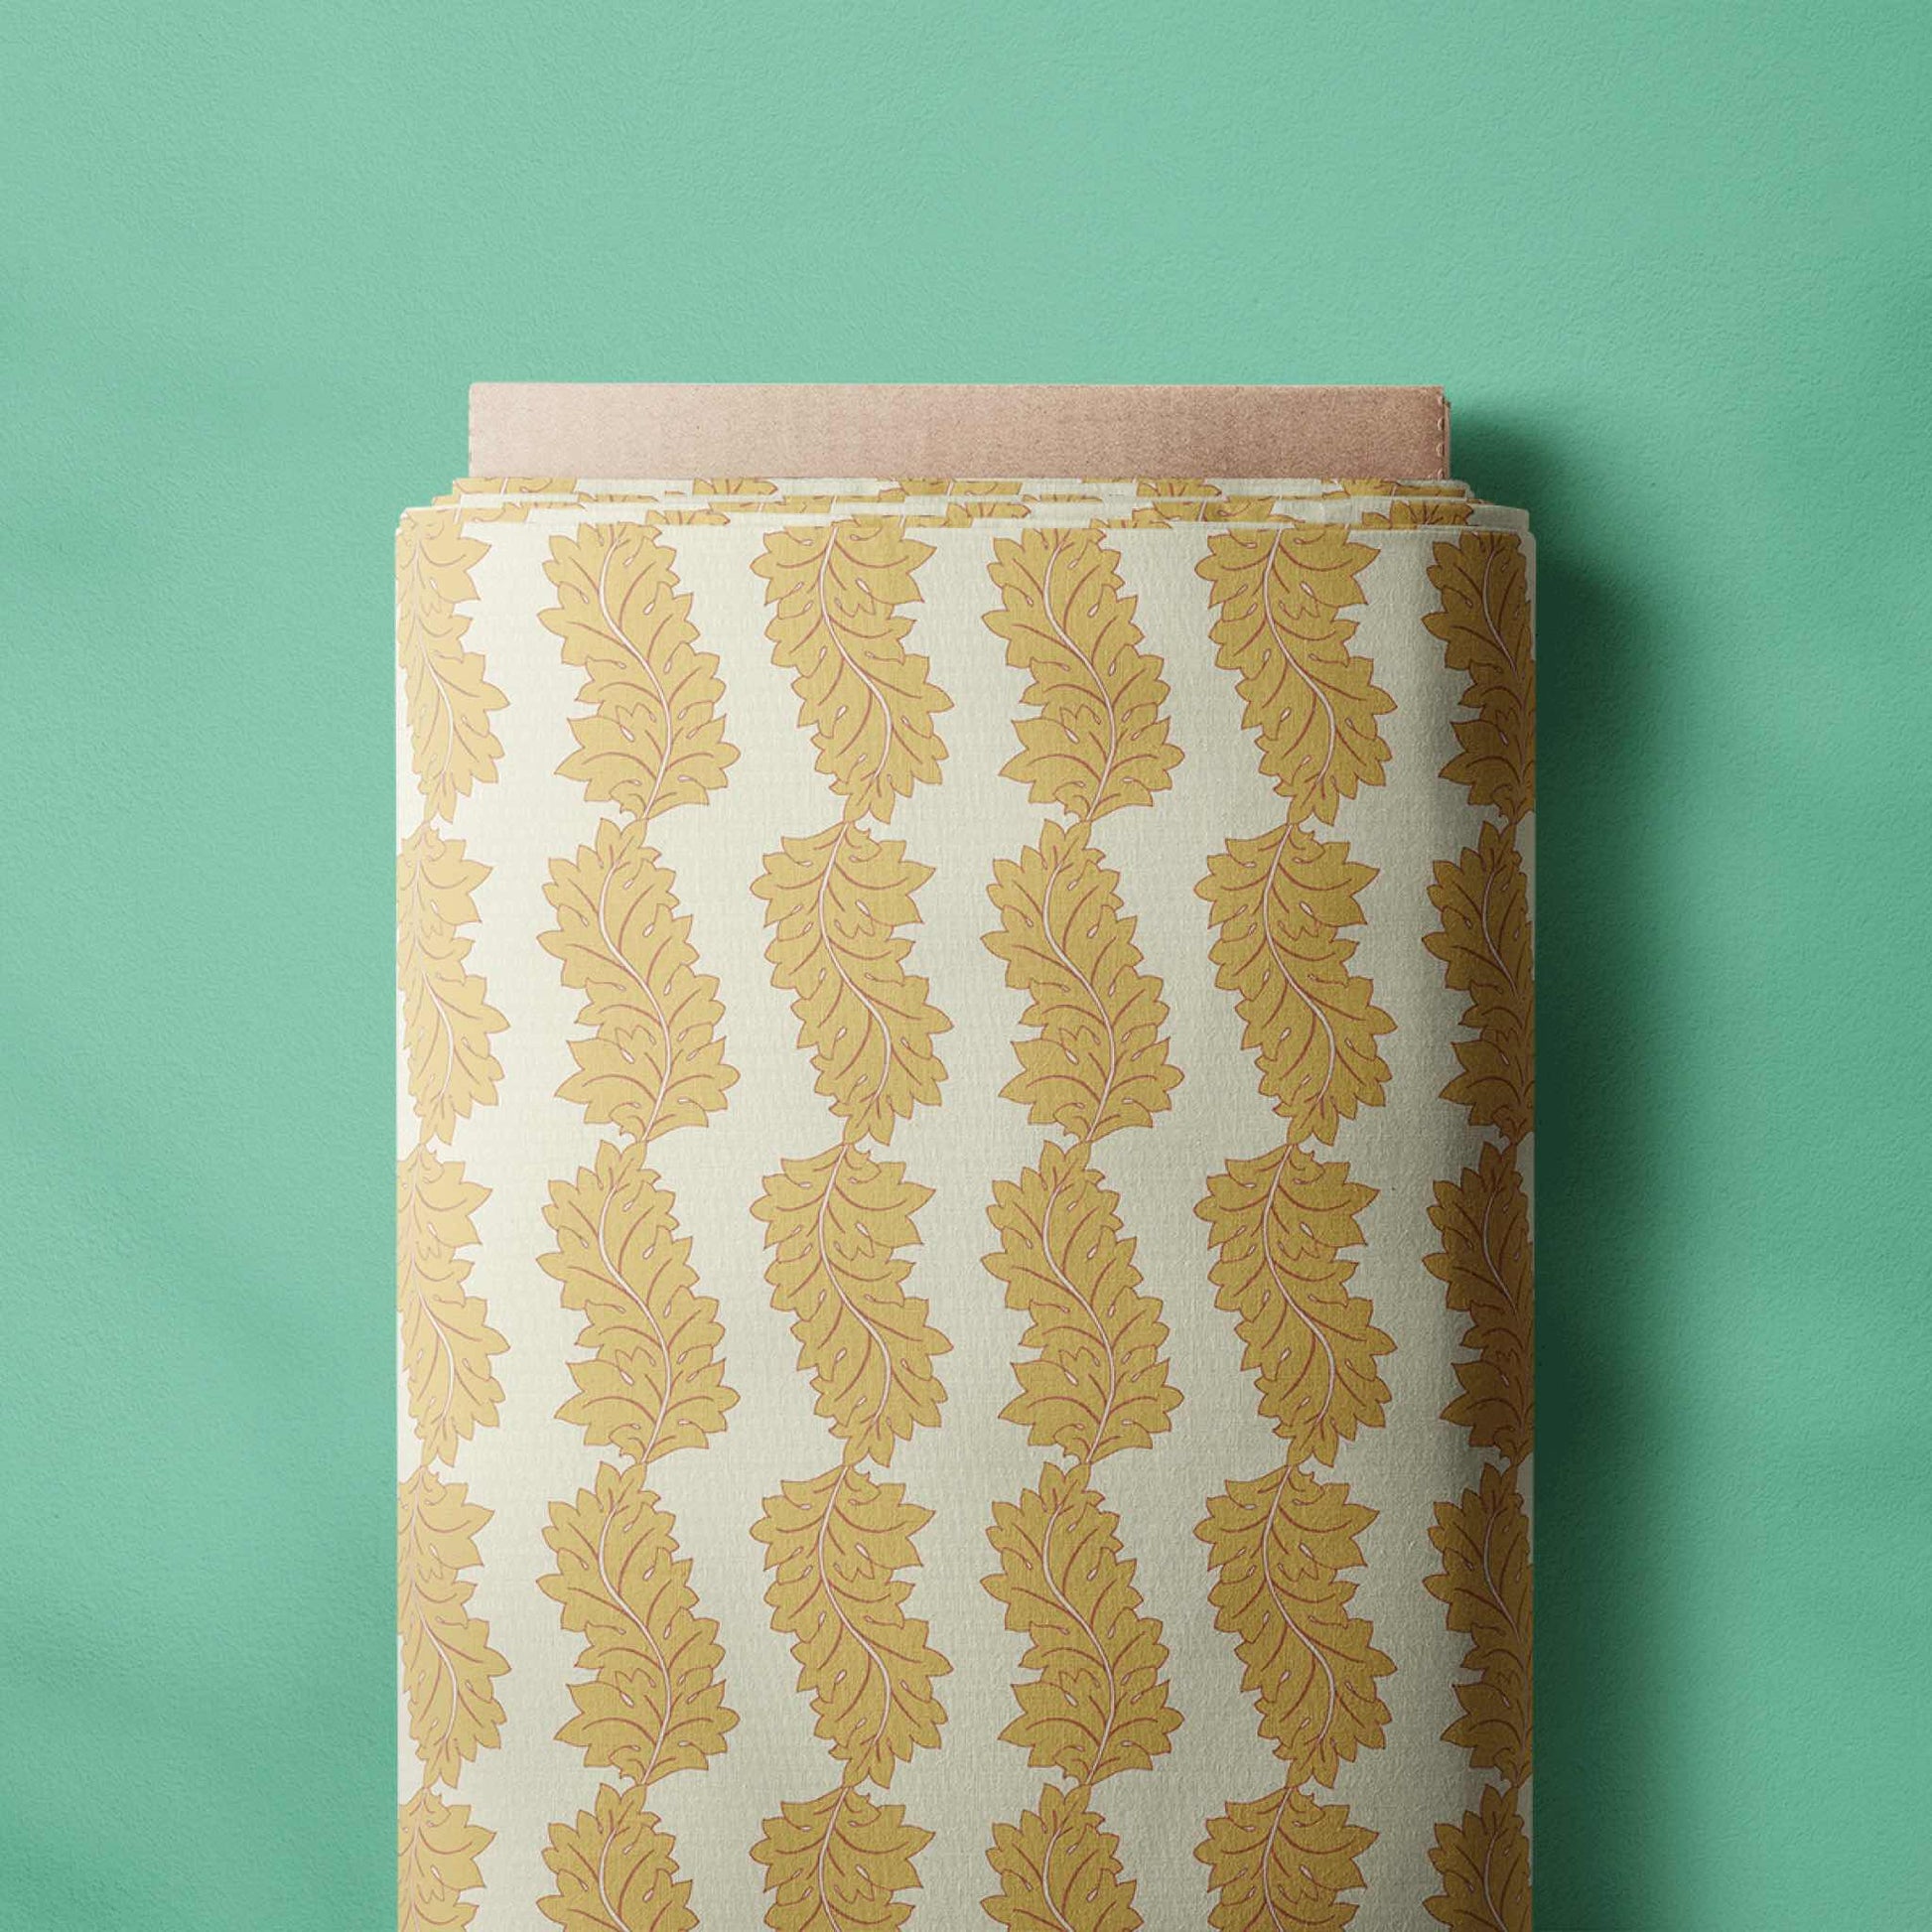 Personalised Men's Gift Idea: DIY Cotton Poplin in Acanthus Leaf Yellow maximalist design